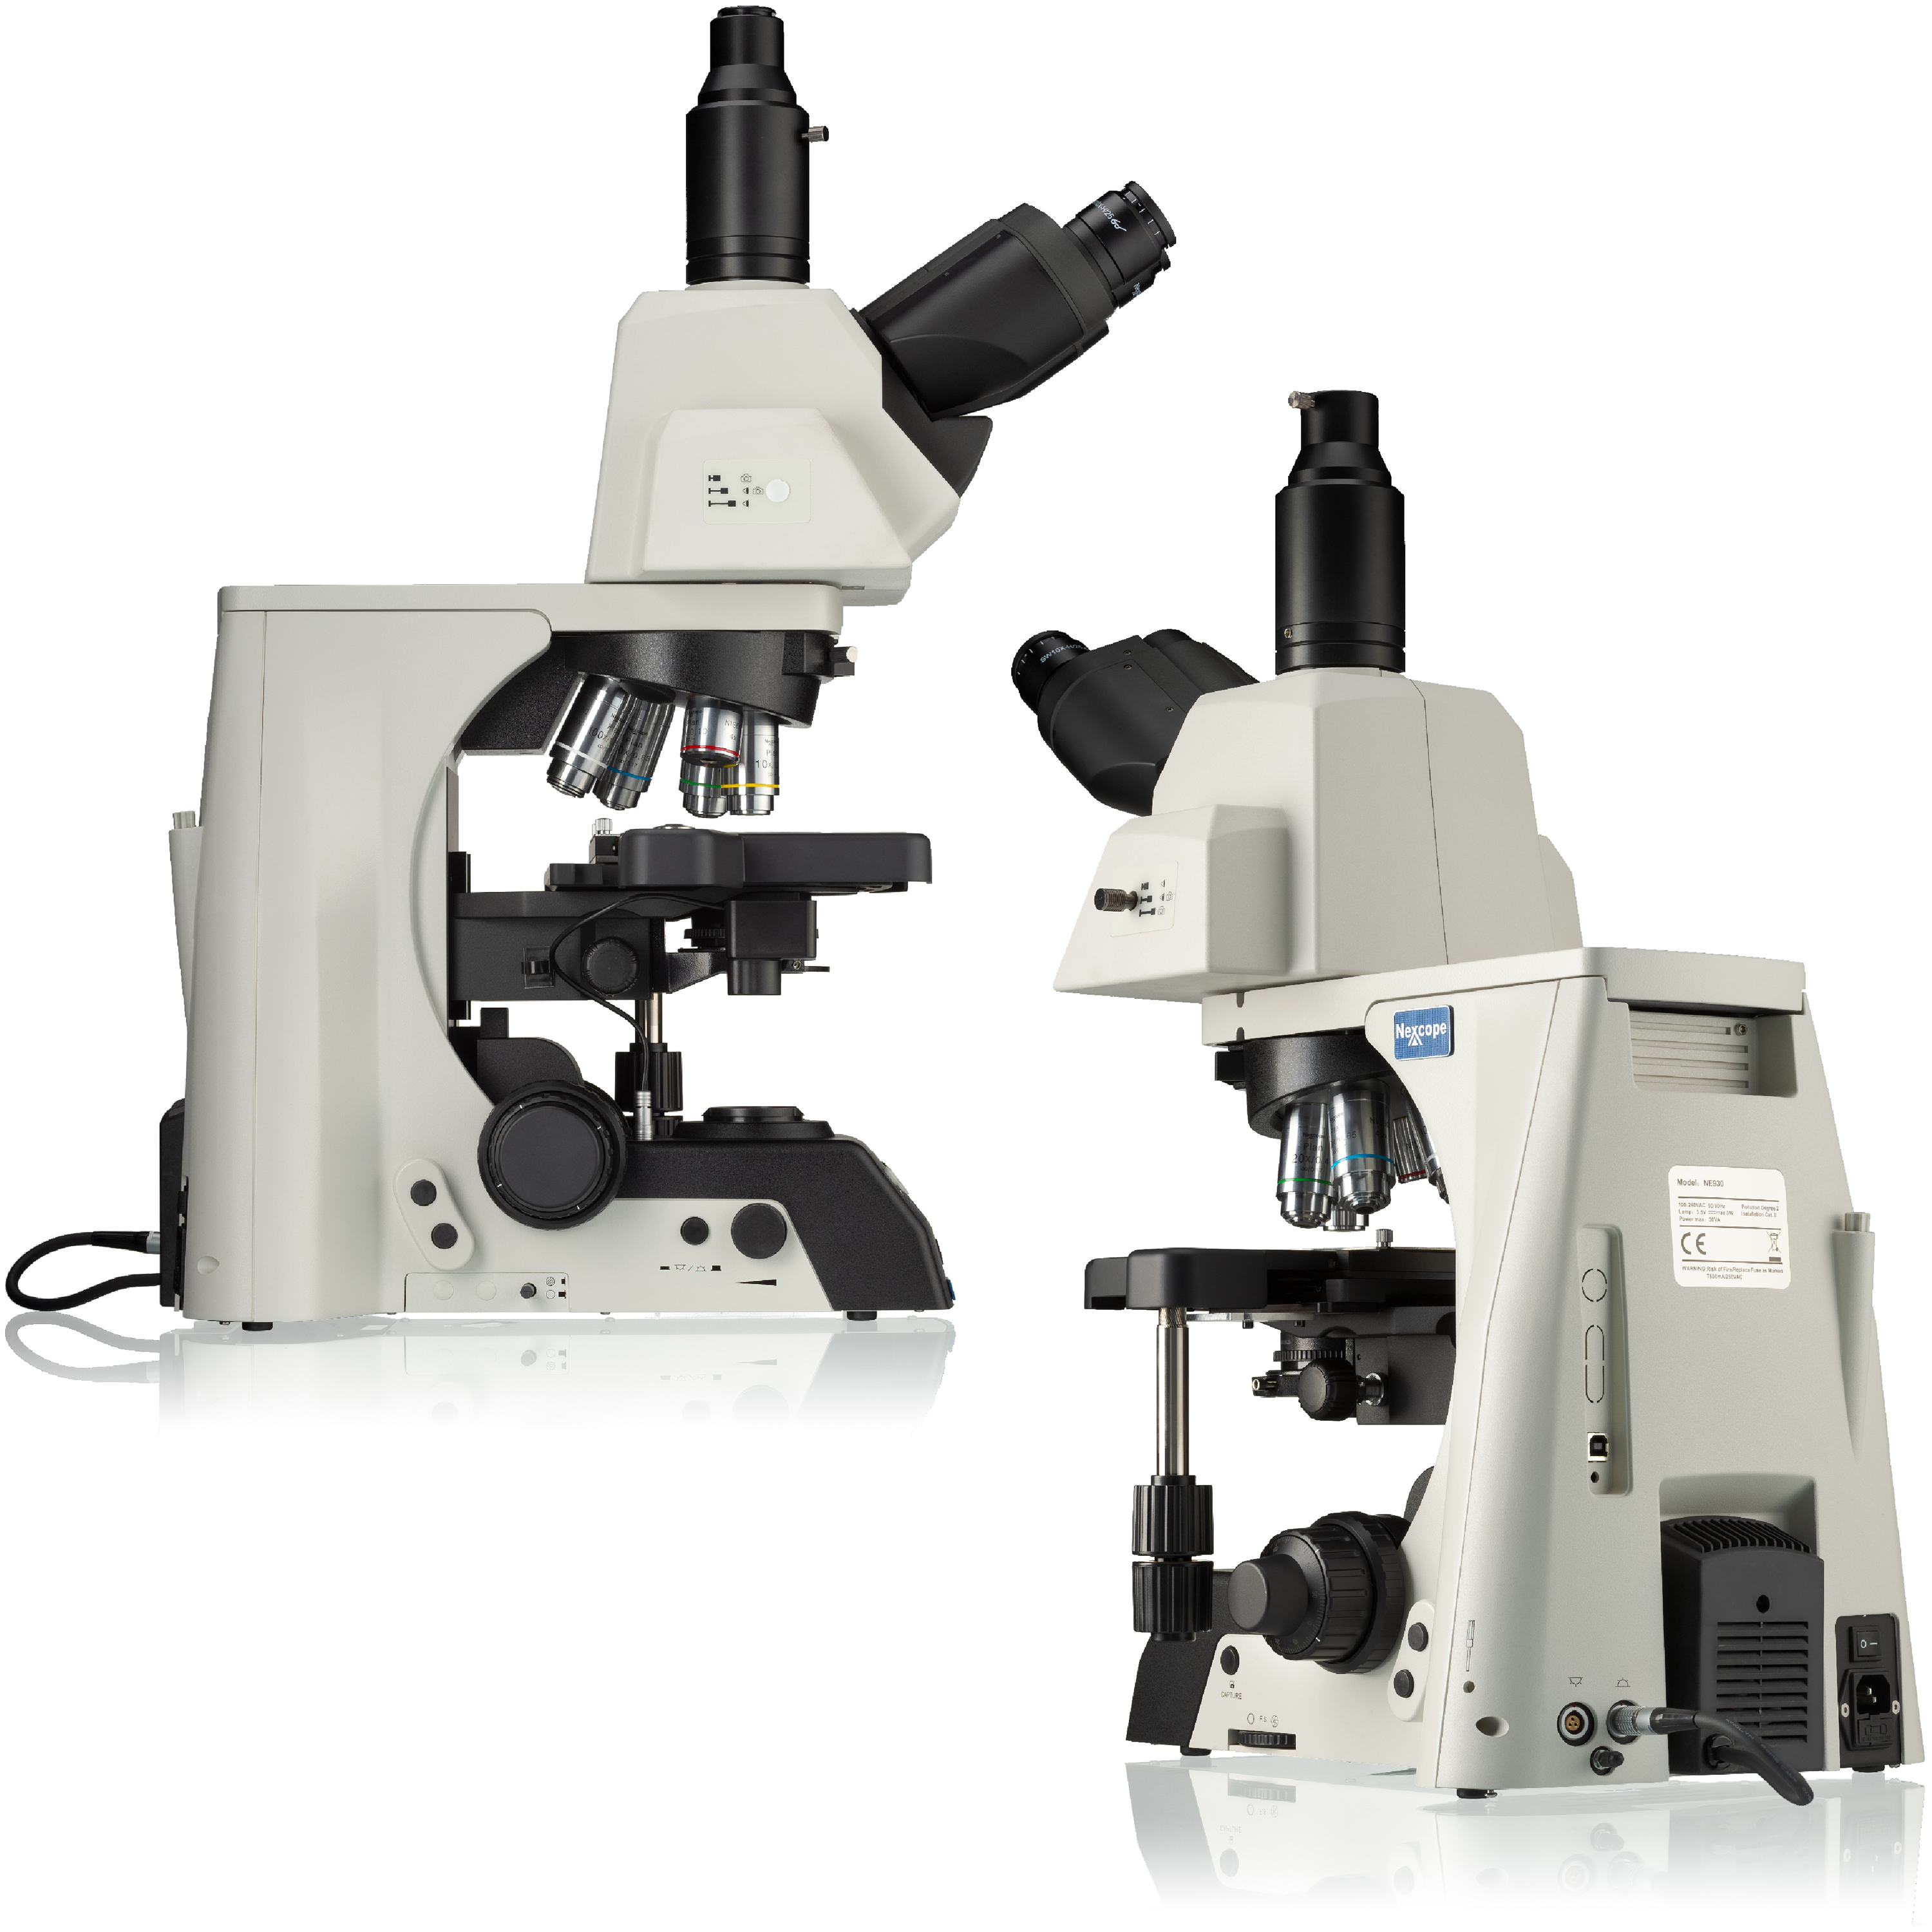 Microscopio profesional de laboratorio Nexcope NE930 con revólver de 6 objetivos motorizado